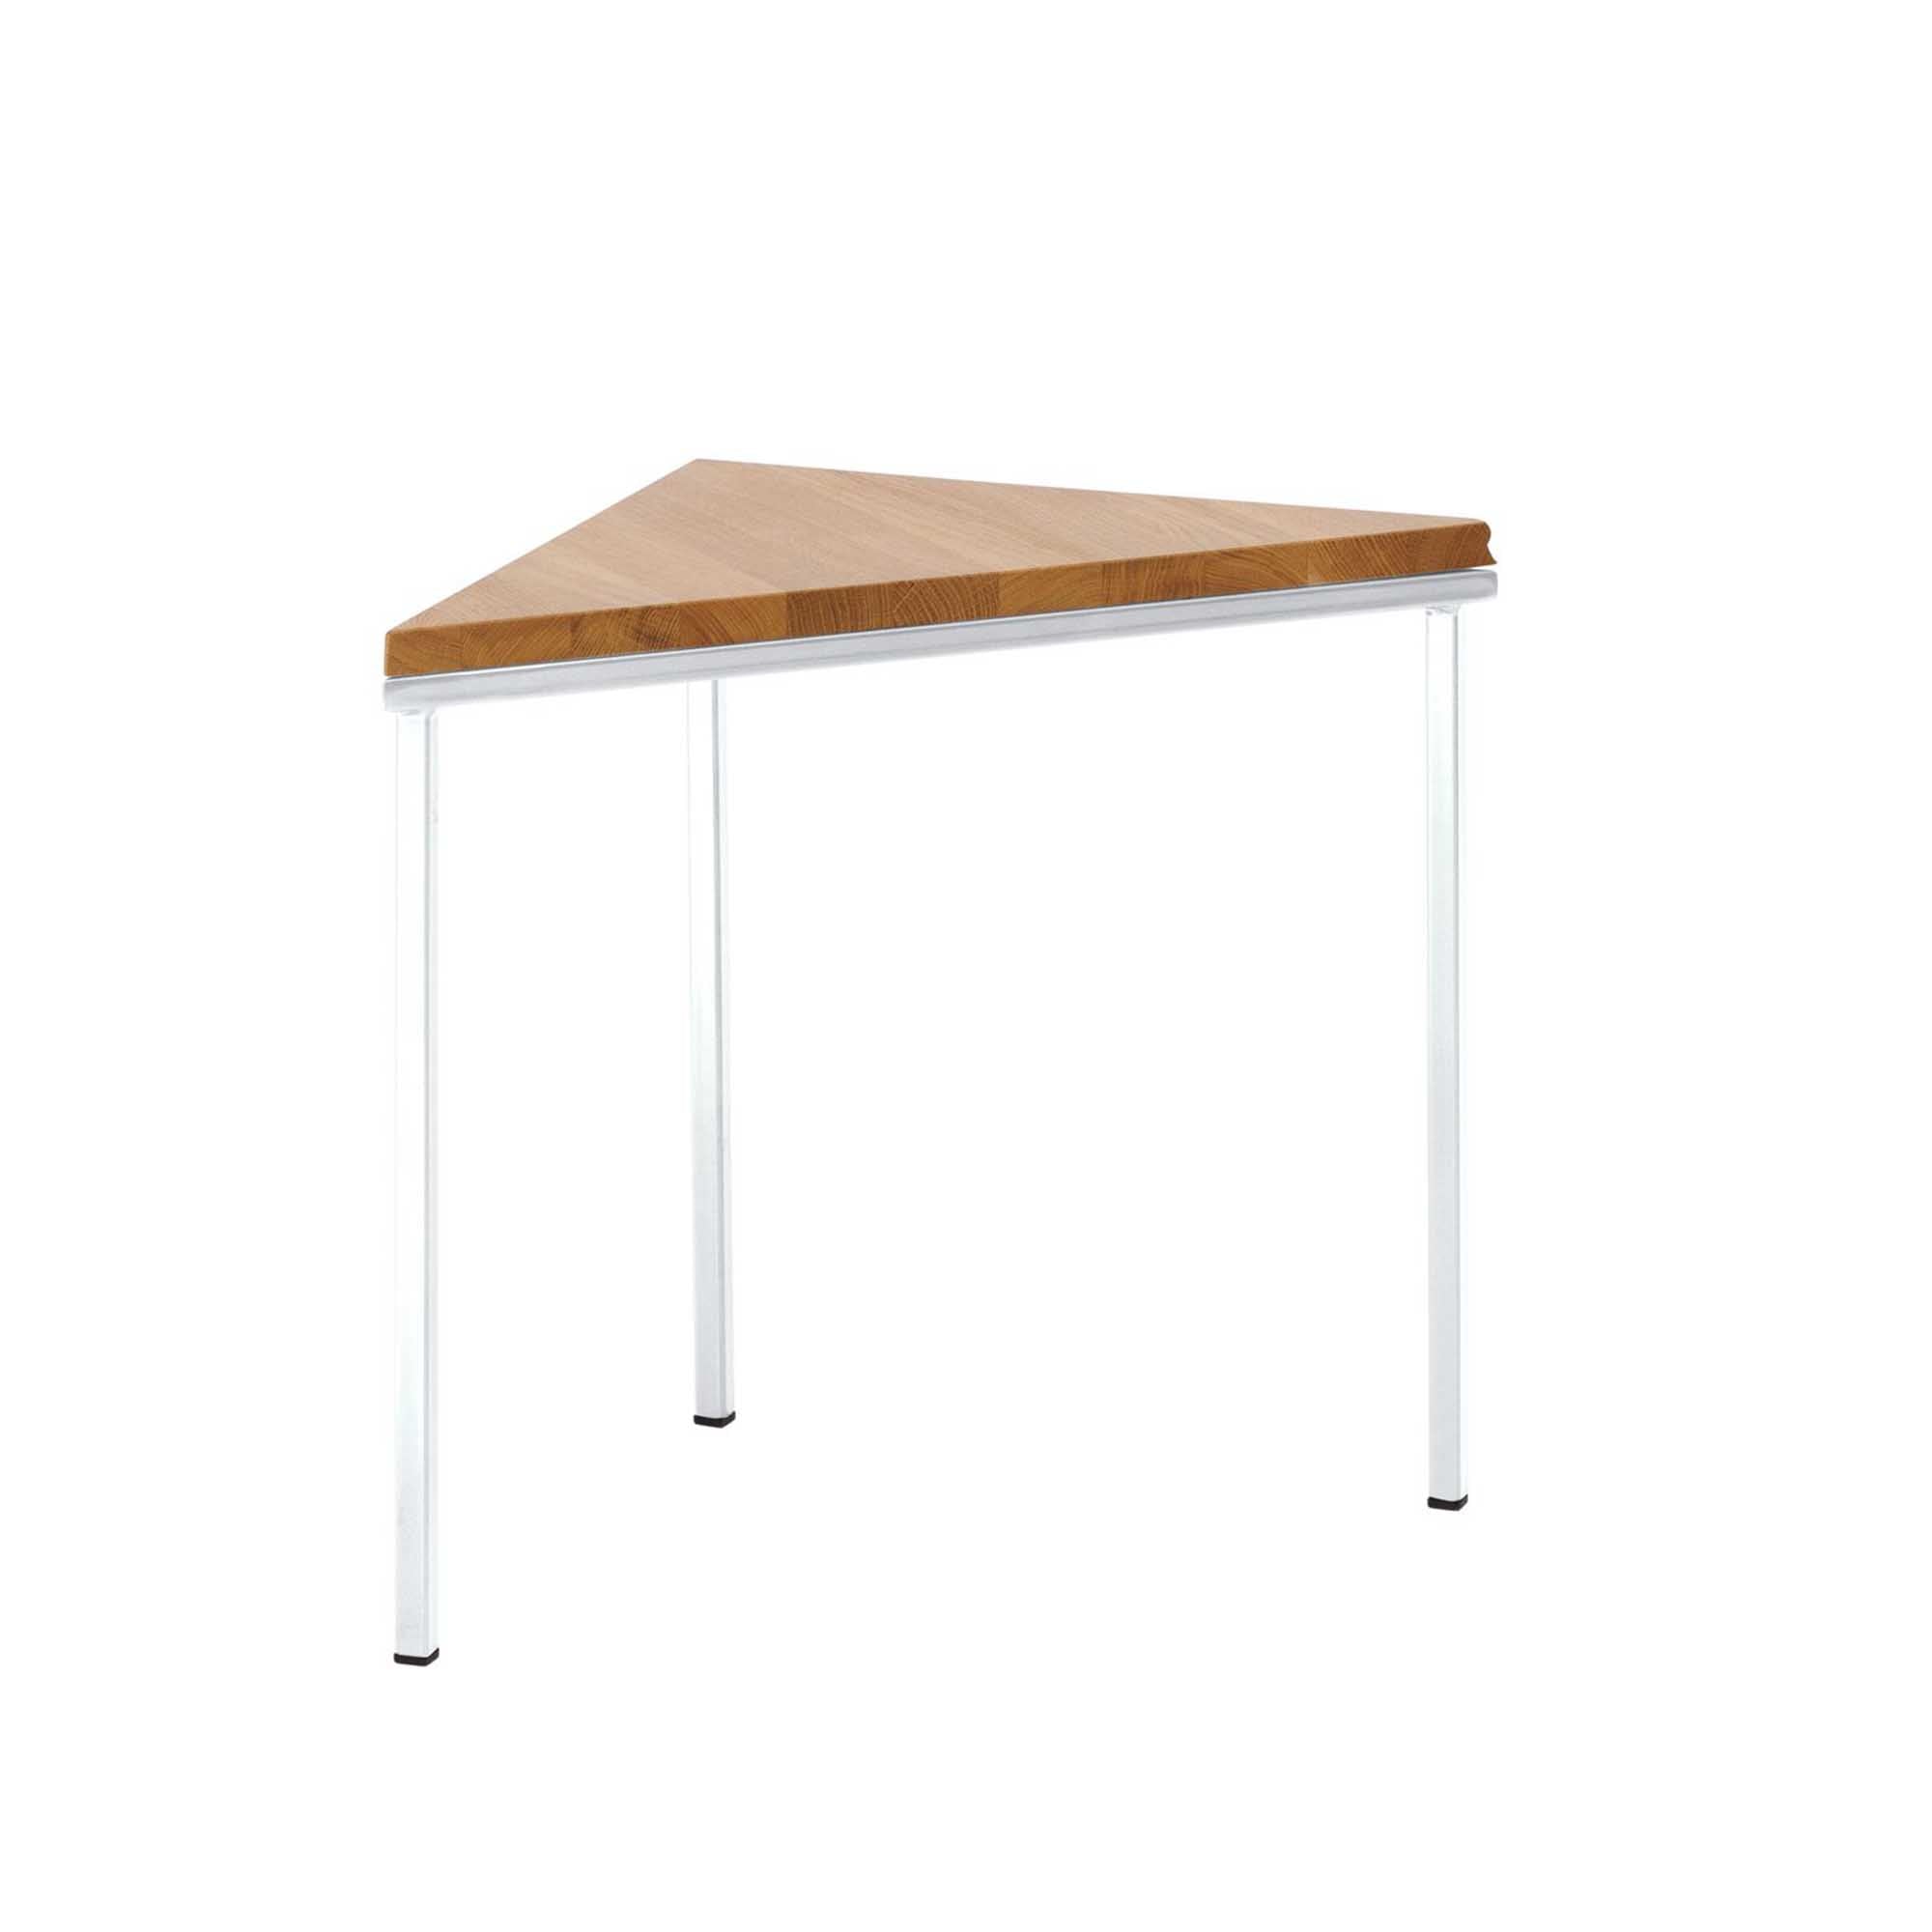 Tripod Table, Oak Wood, Natural Colour white frame, front view